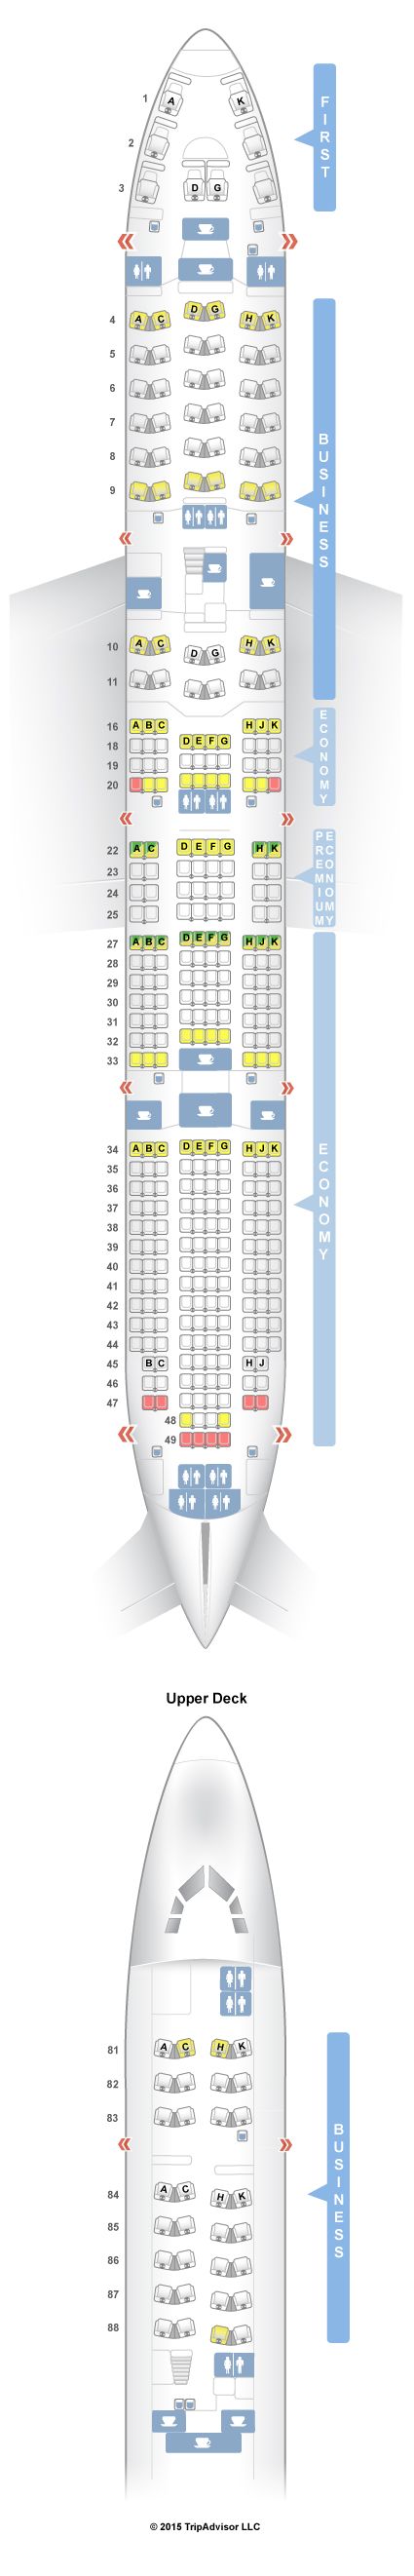 lufthansa 747 8 seating chart